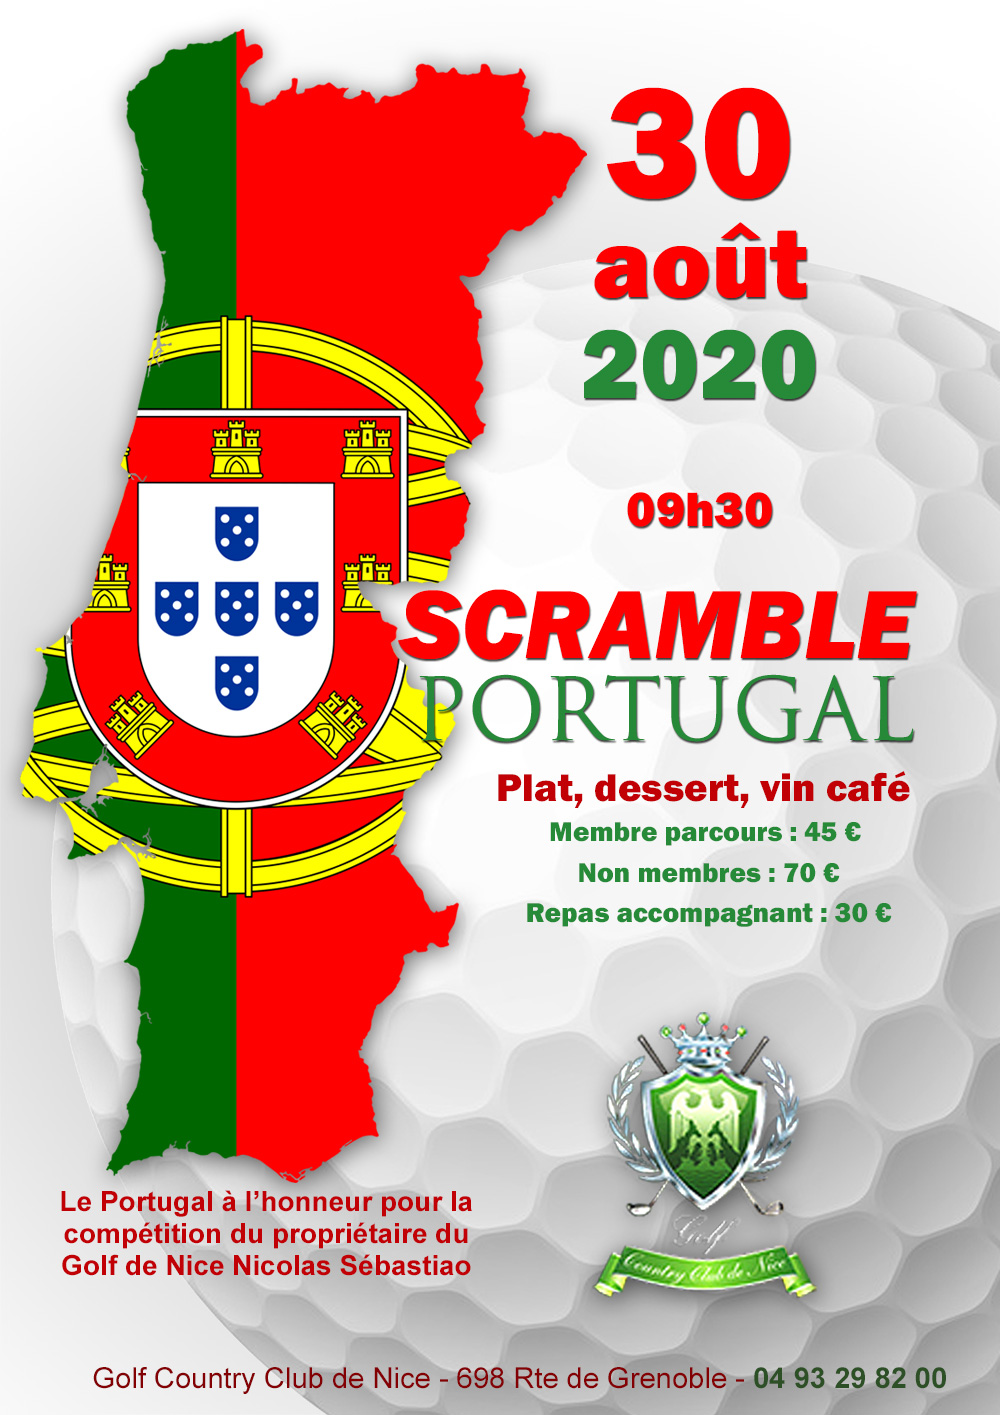 SCRAMBLE PORTUGAL 30aout